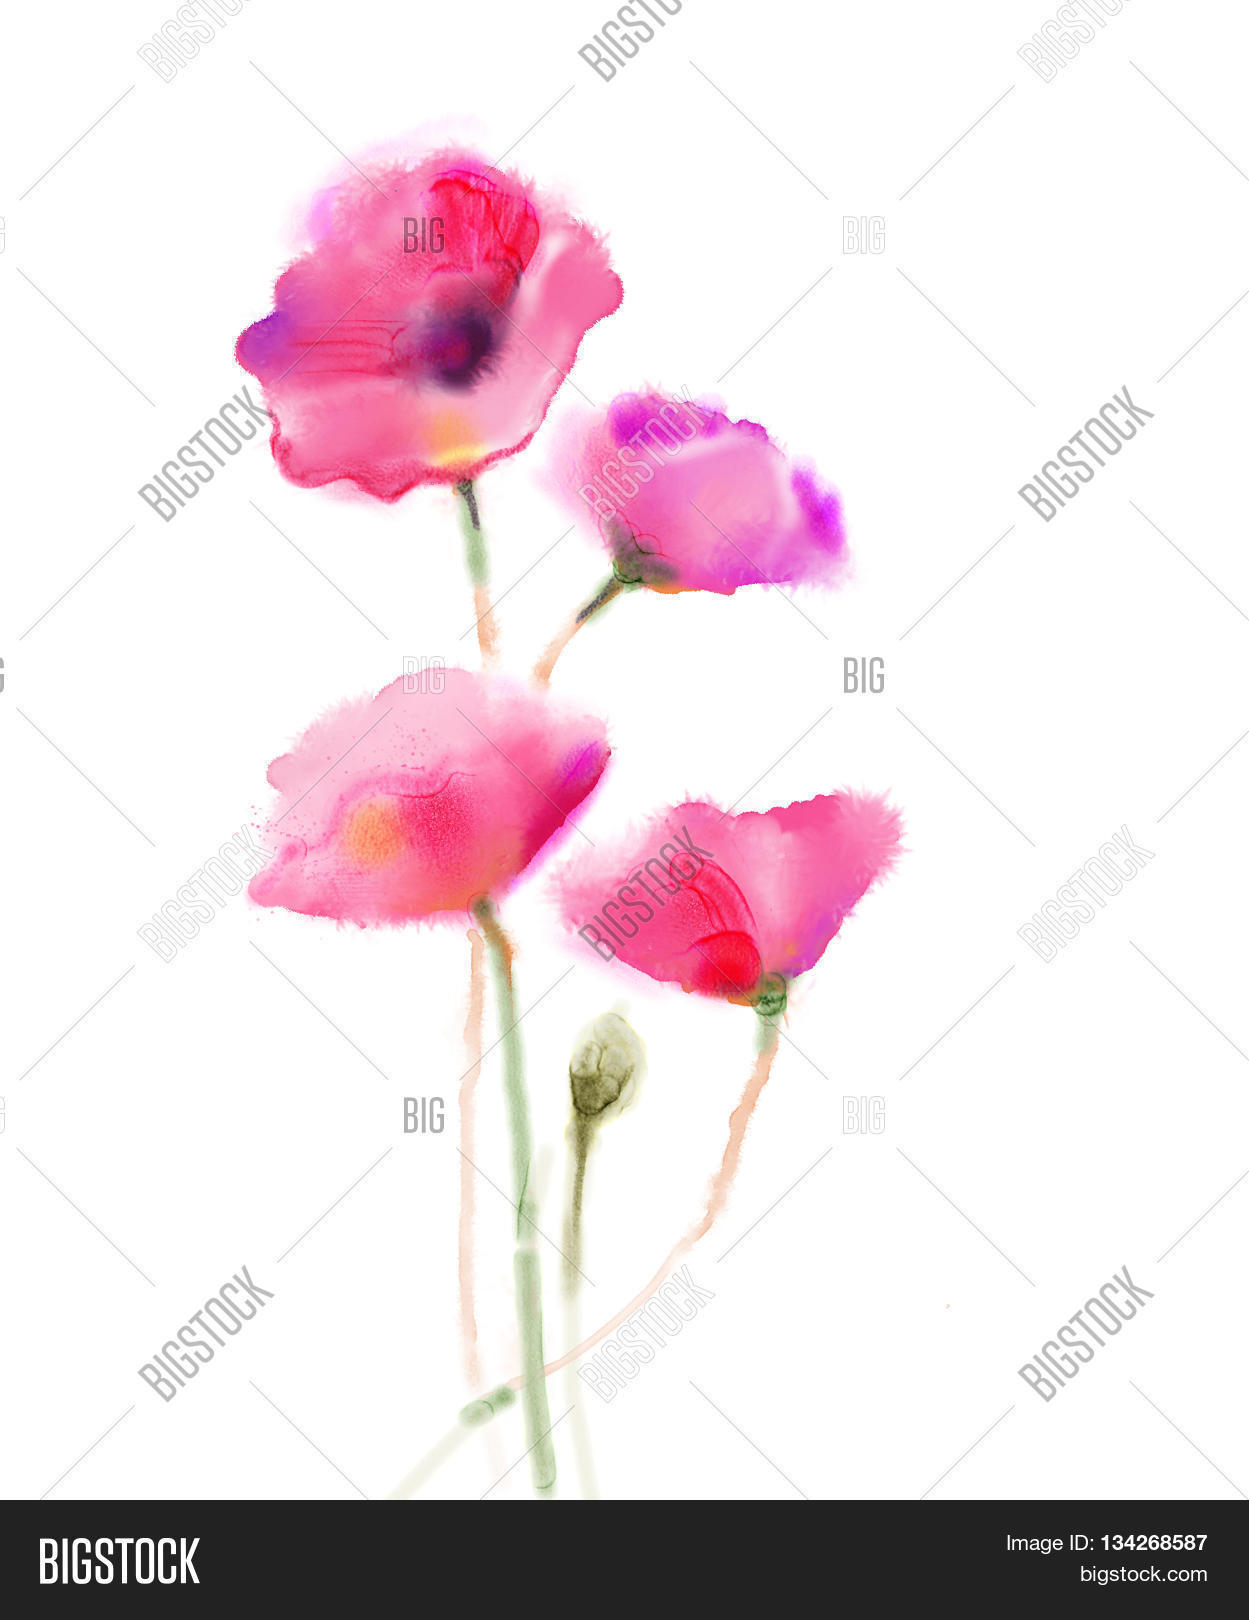 Watercolor Painting Poppy Flower. Image & Photo | Bigstock